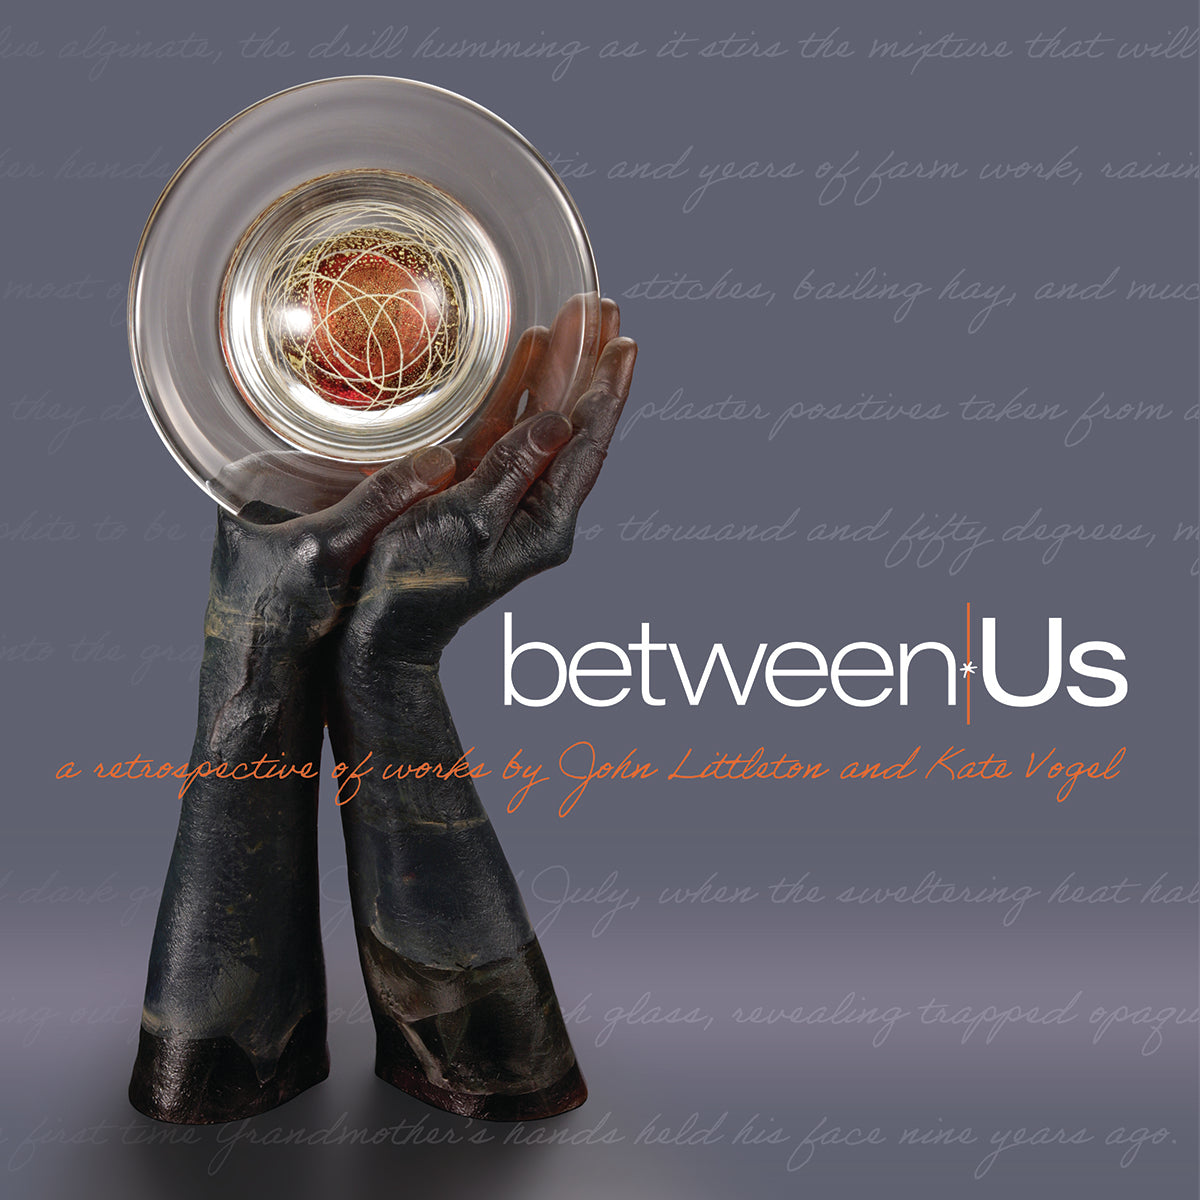 Between Us - A Retrospective of Works by John Littleton and Kate Vogel